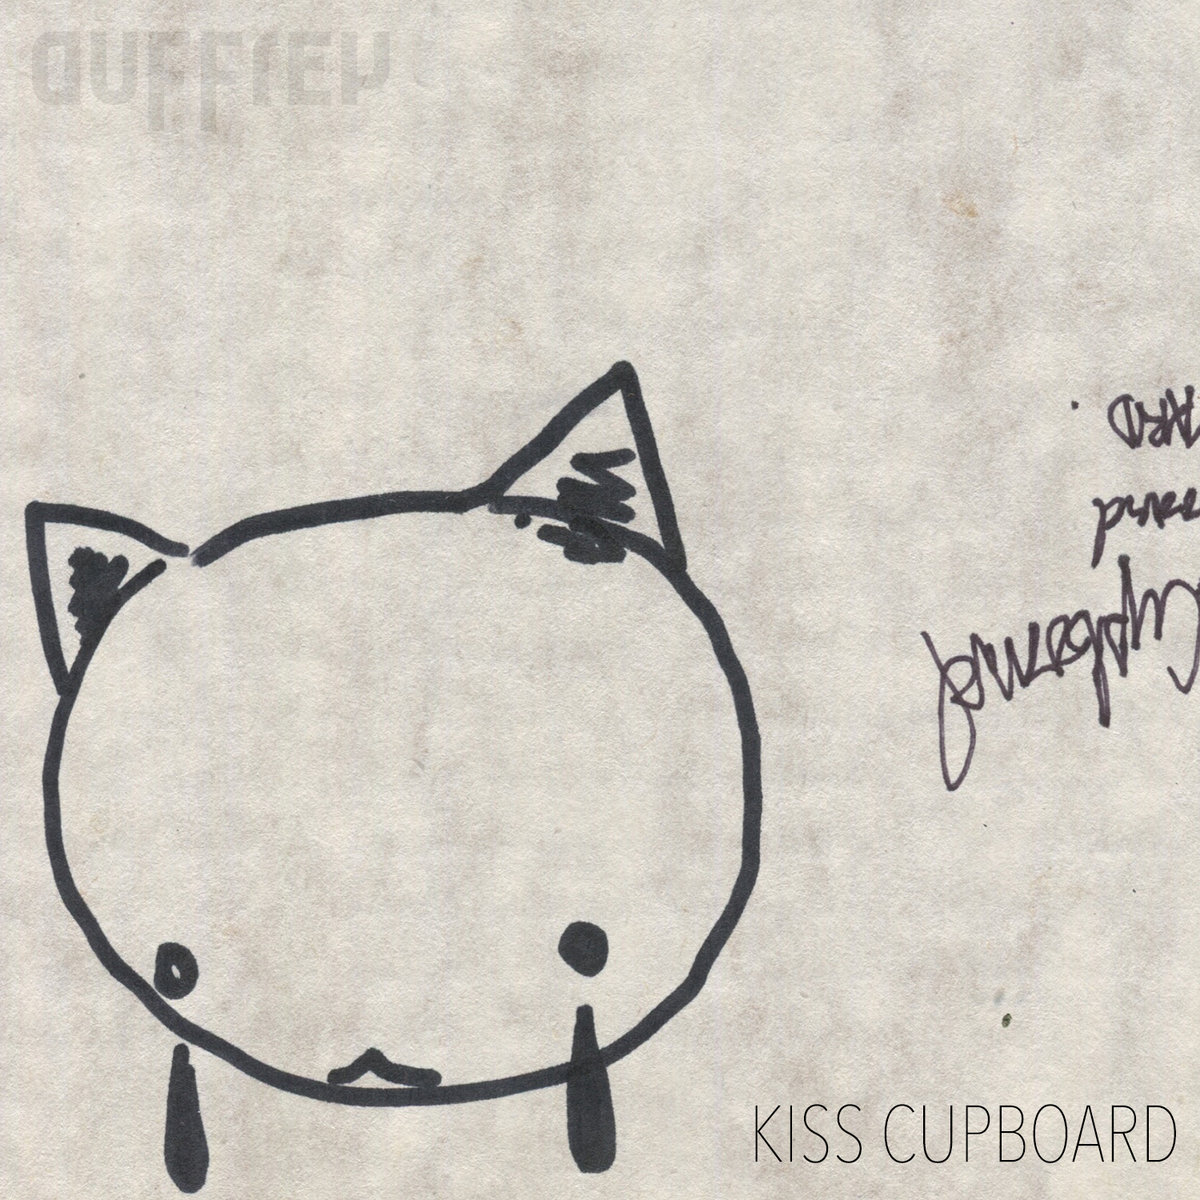 Duffrey - Kiss Cupboard (artwork)